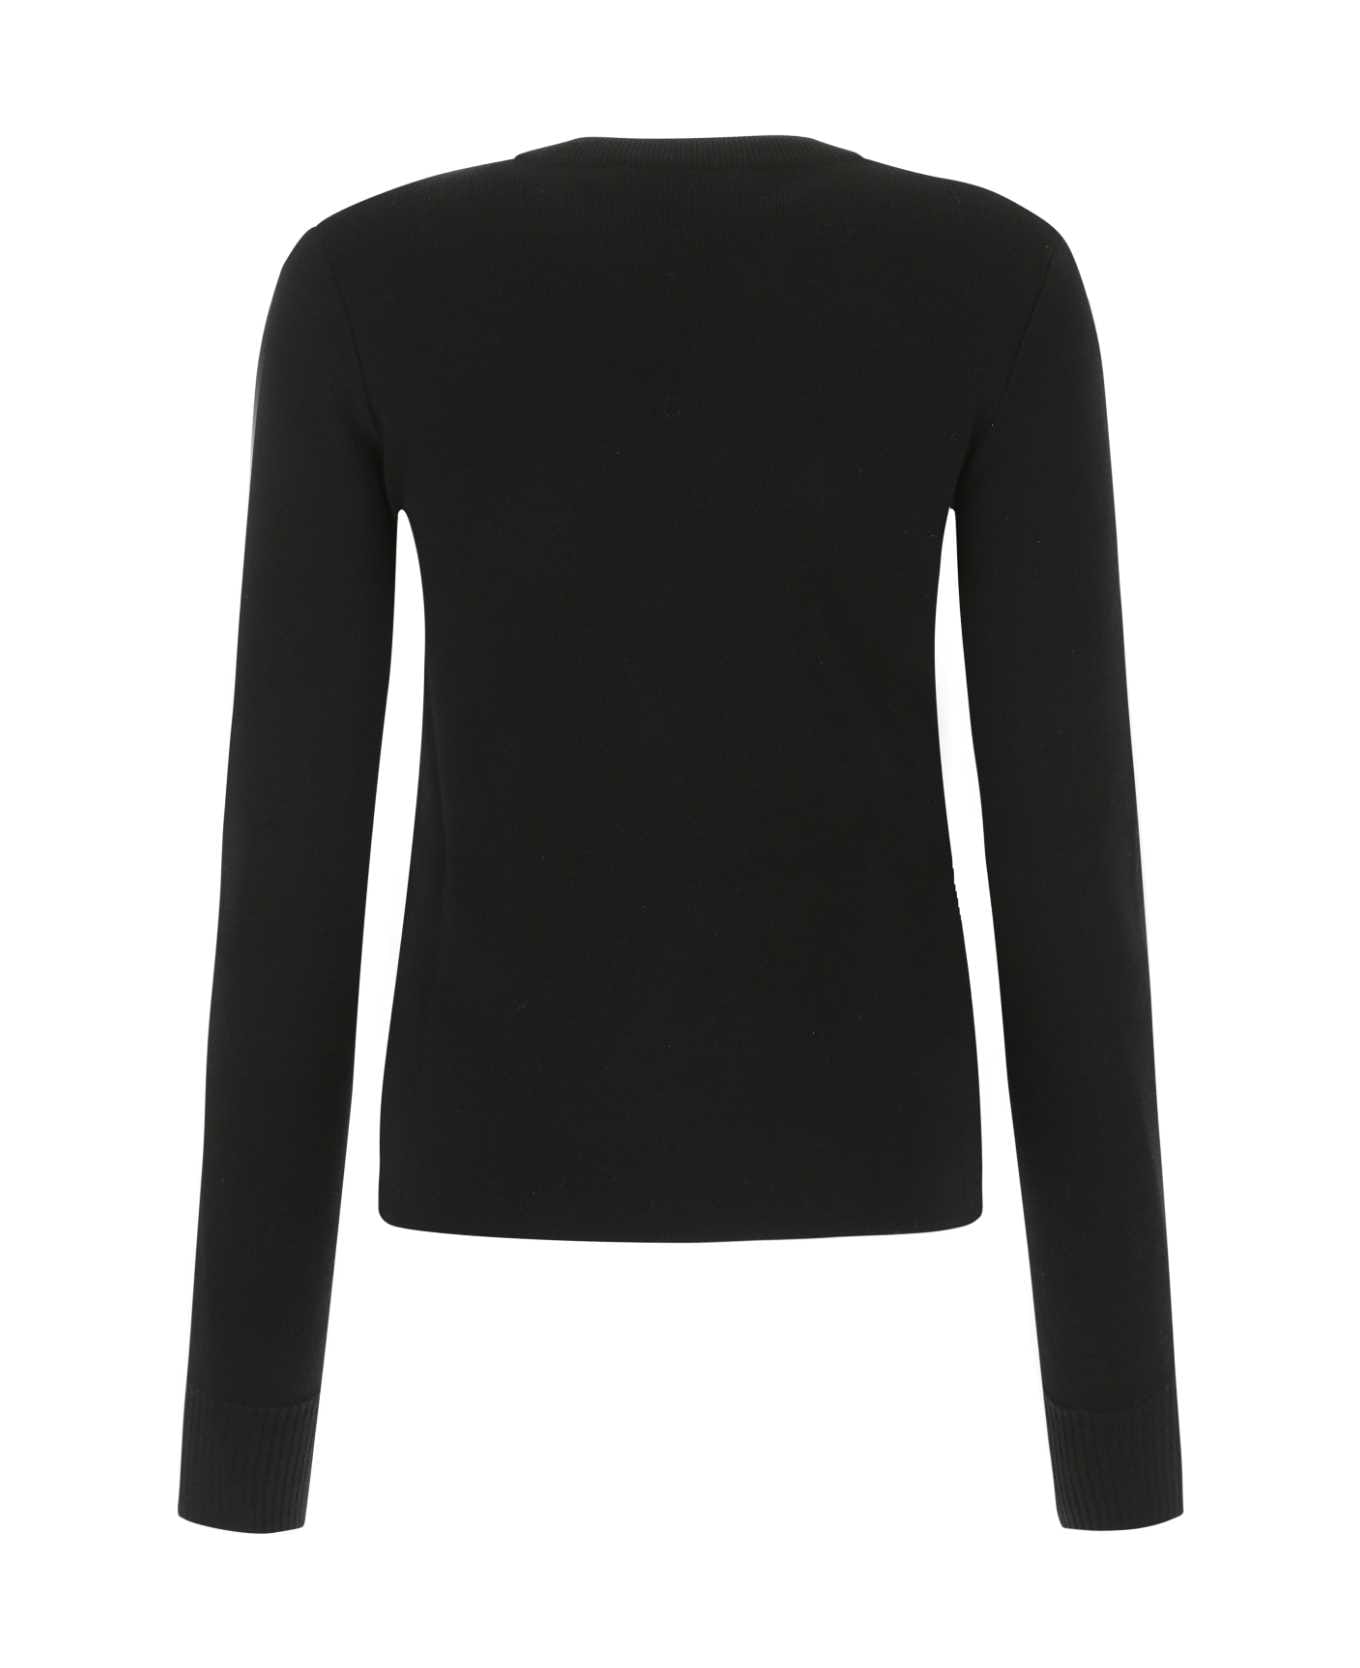 Alexander McQueen Black Stretch Wool Blend Sweater - 1000